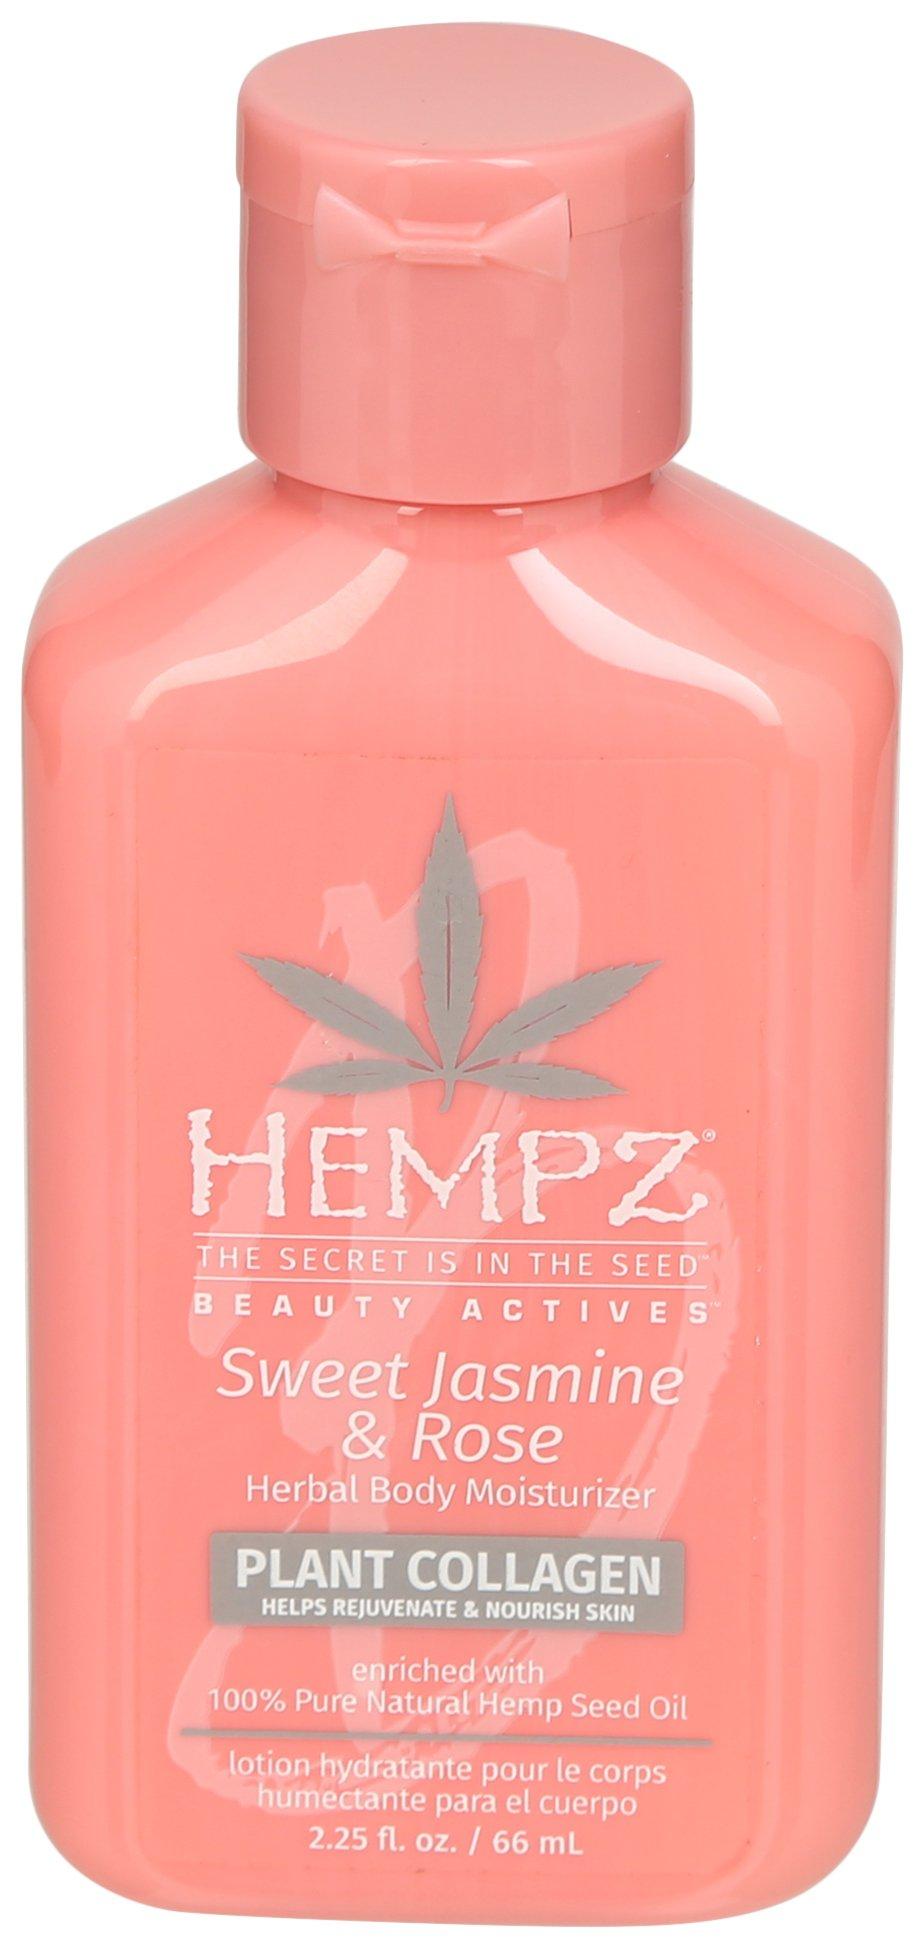 2.25 Fl.Oz. Jasmine & Rose Herbal Body Moisturizer